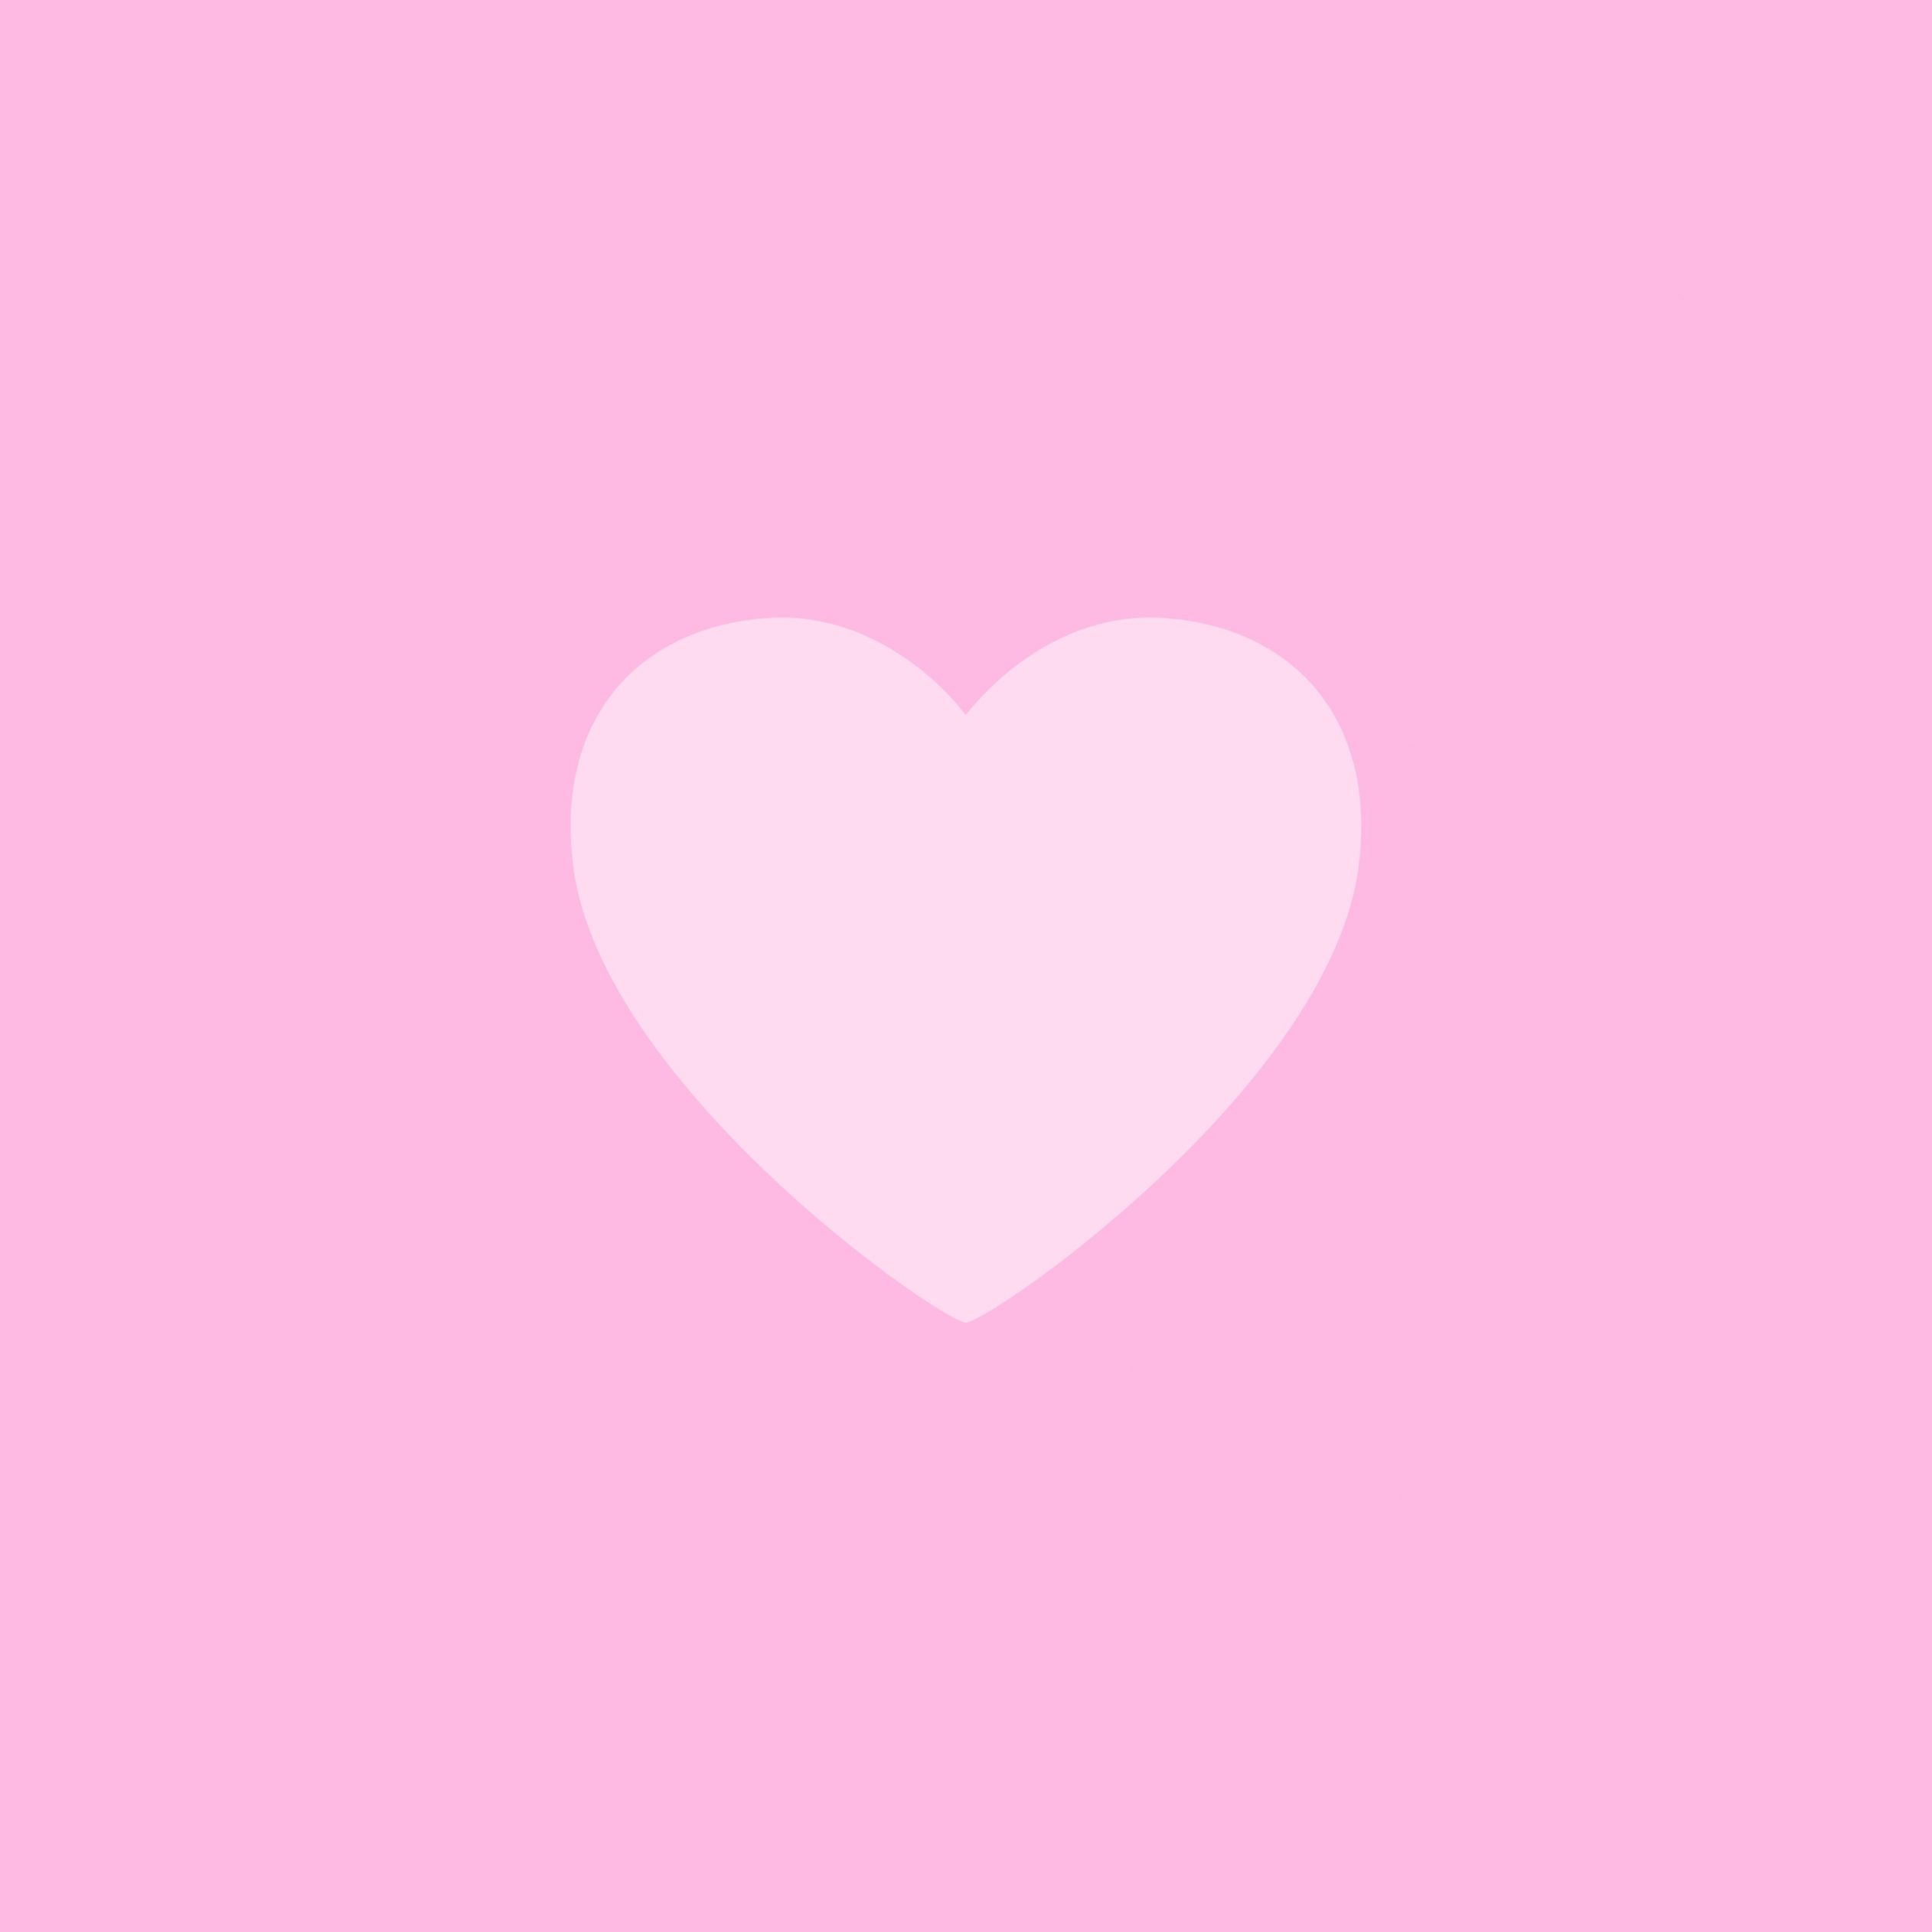 2524x2524 Parallax wallpaper 4k Love Heart Pink Background iPad Wallpaper 2524x2524 pixels resolution